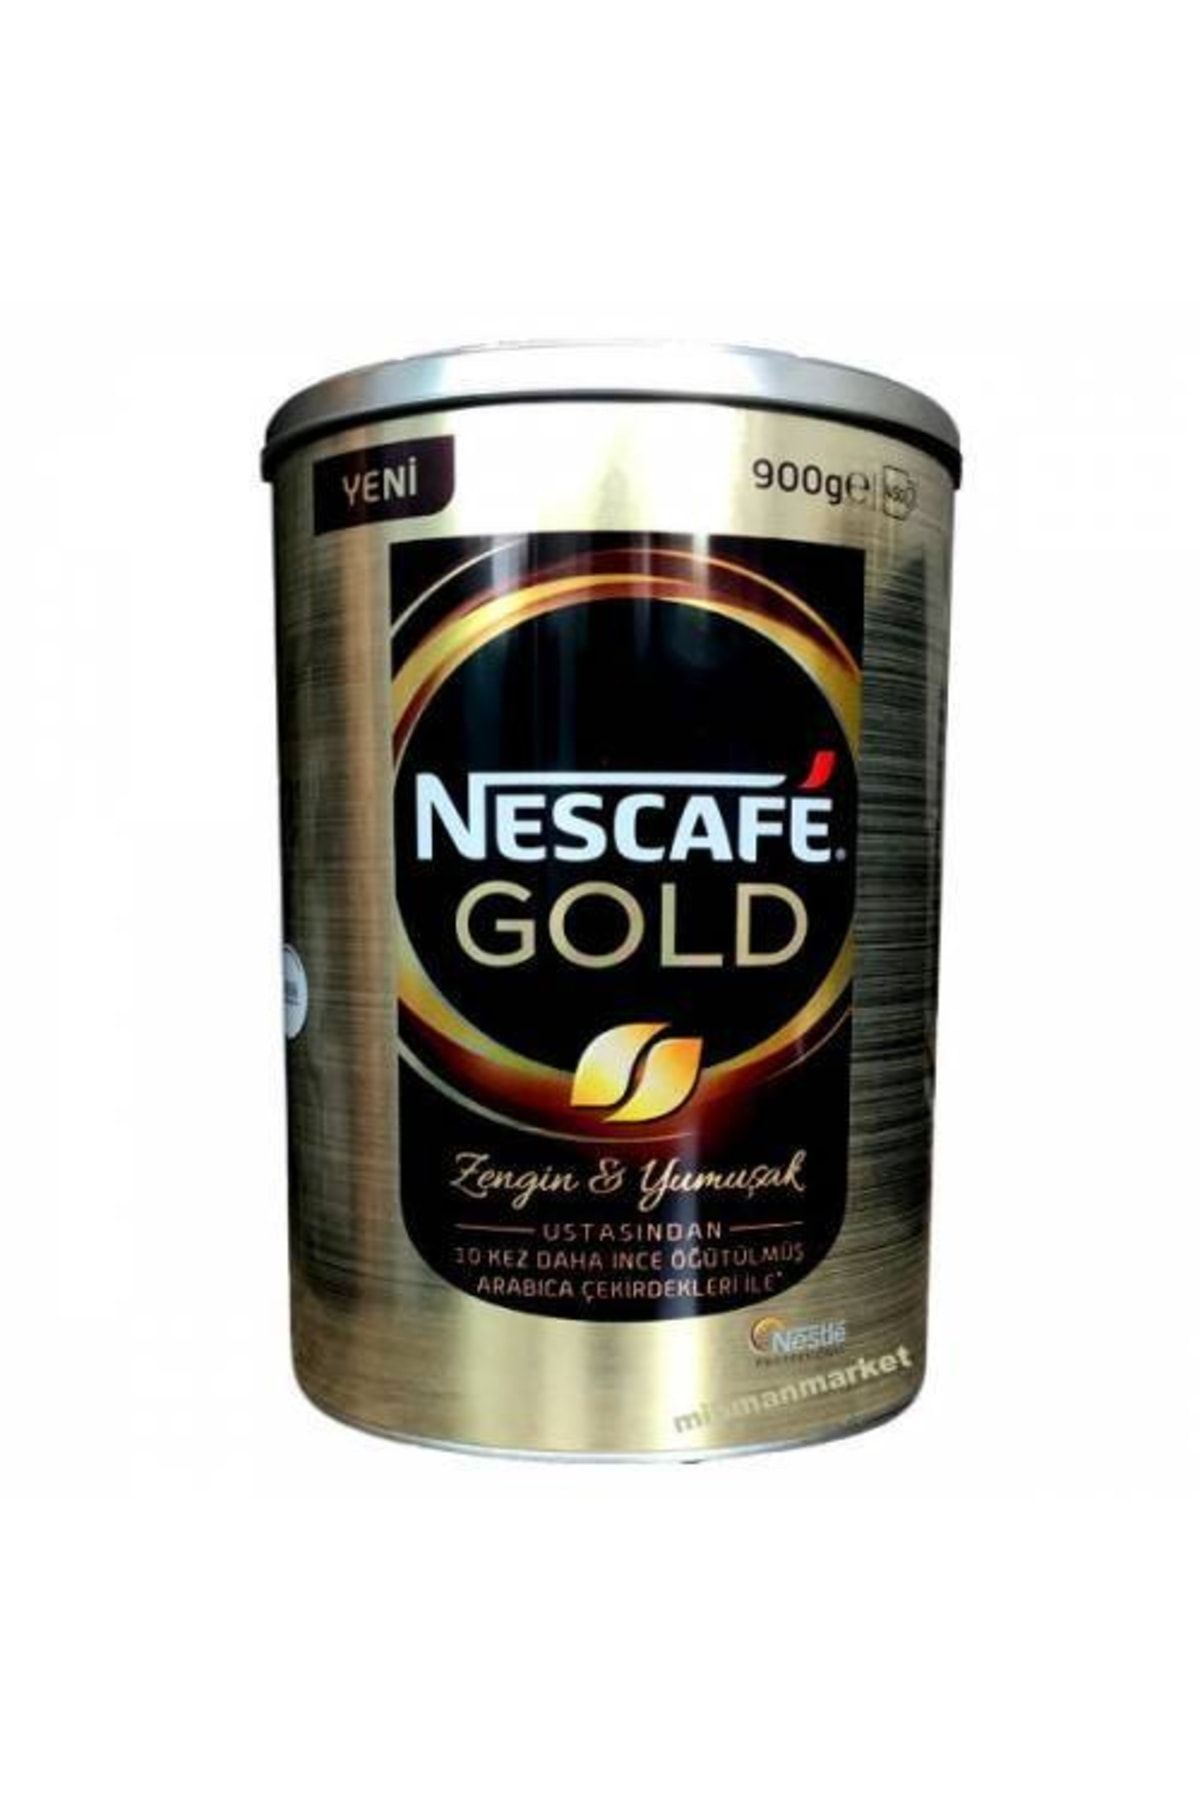 Кофе nescafe gold 900 г. Кофе Нескафе Голд 900 гр. Нестле Голд кофе. Кофе Nescafe 900 грамм. Нескафе Голд Нестле Профешнл 900 гр.